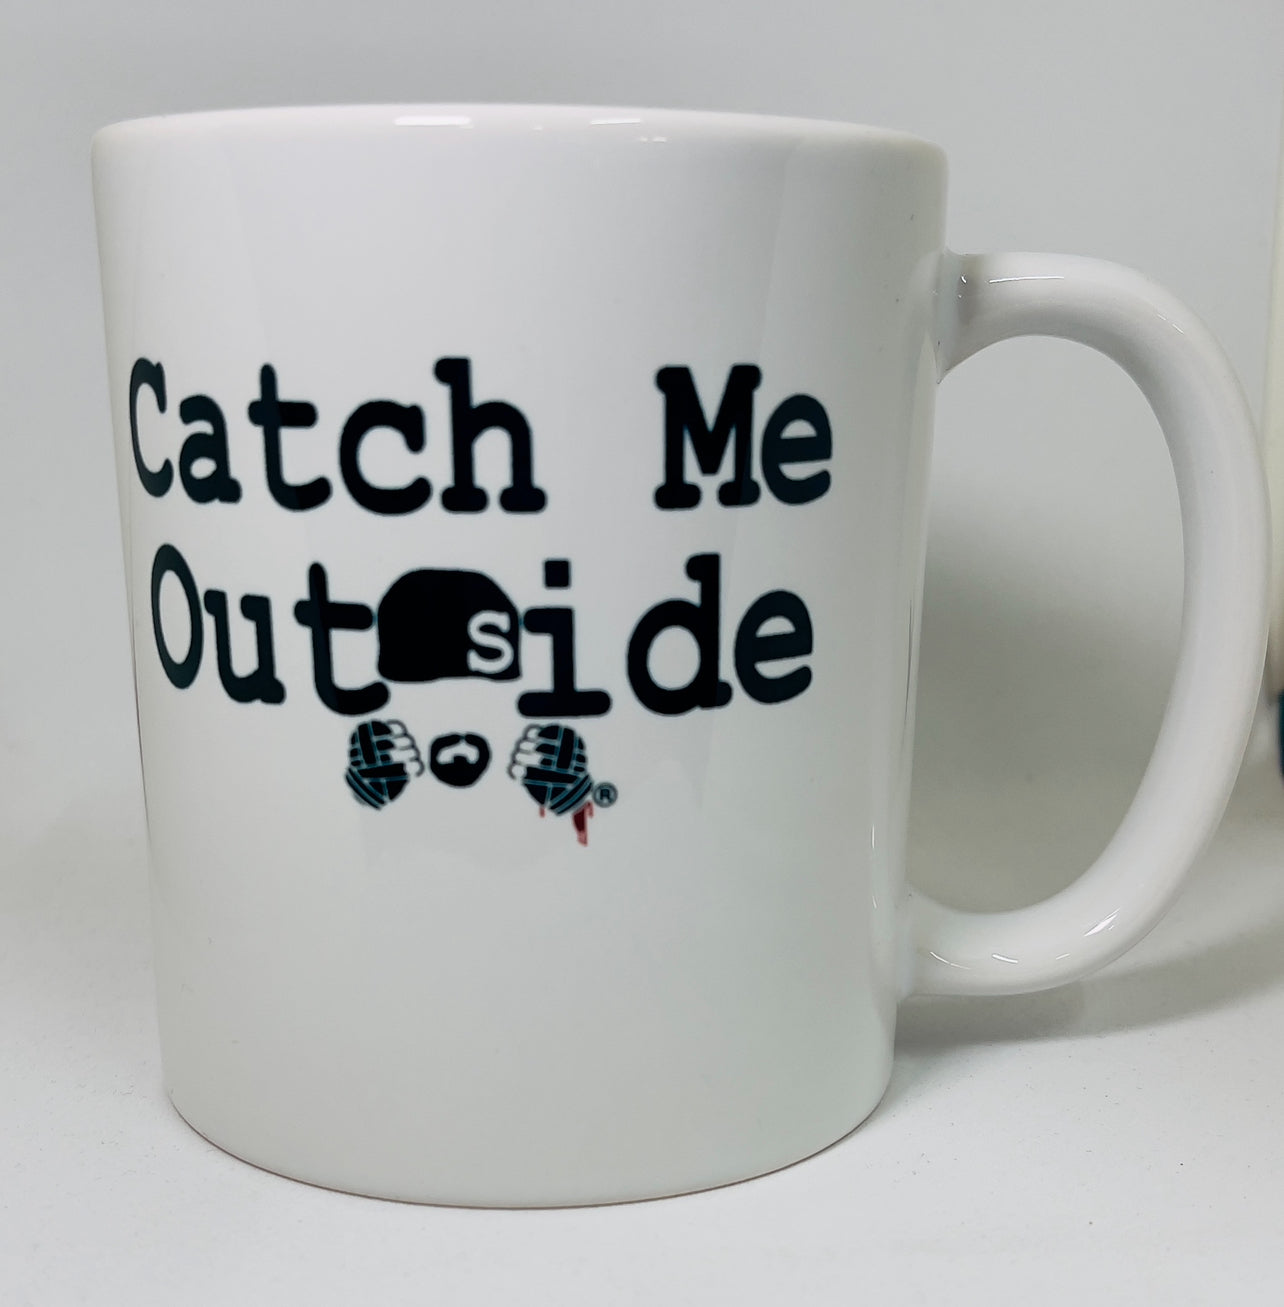 Catch Me Outside